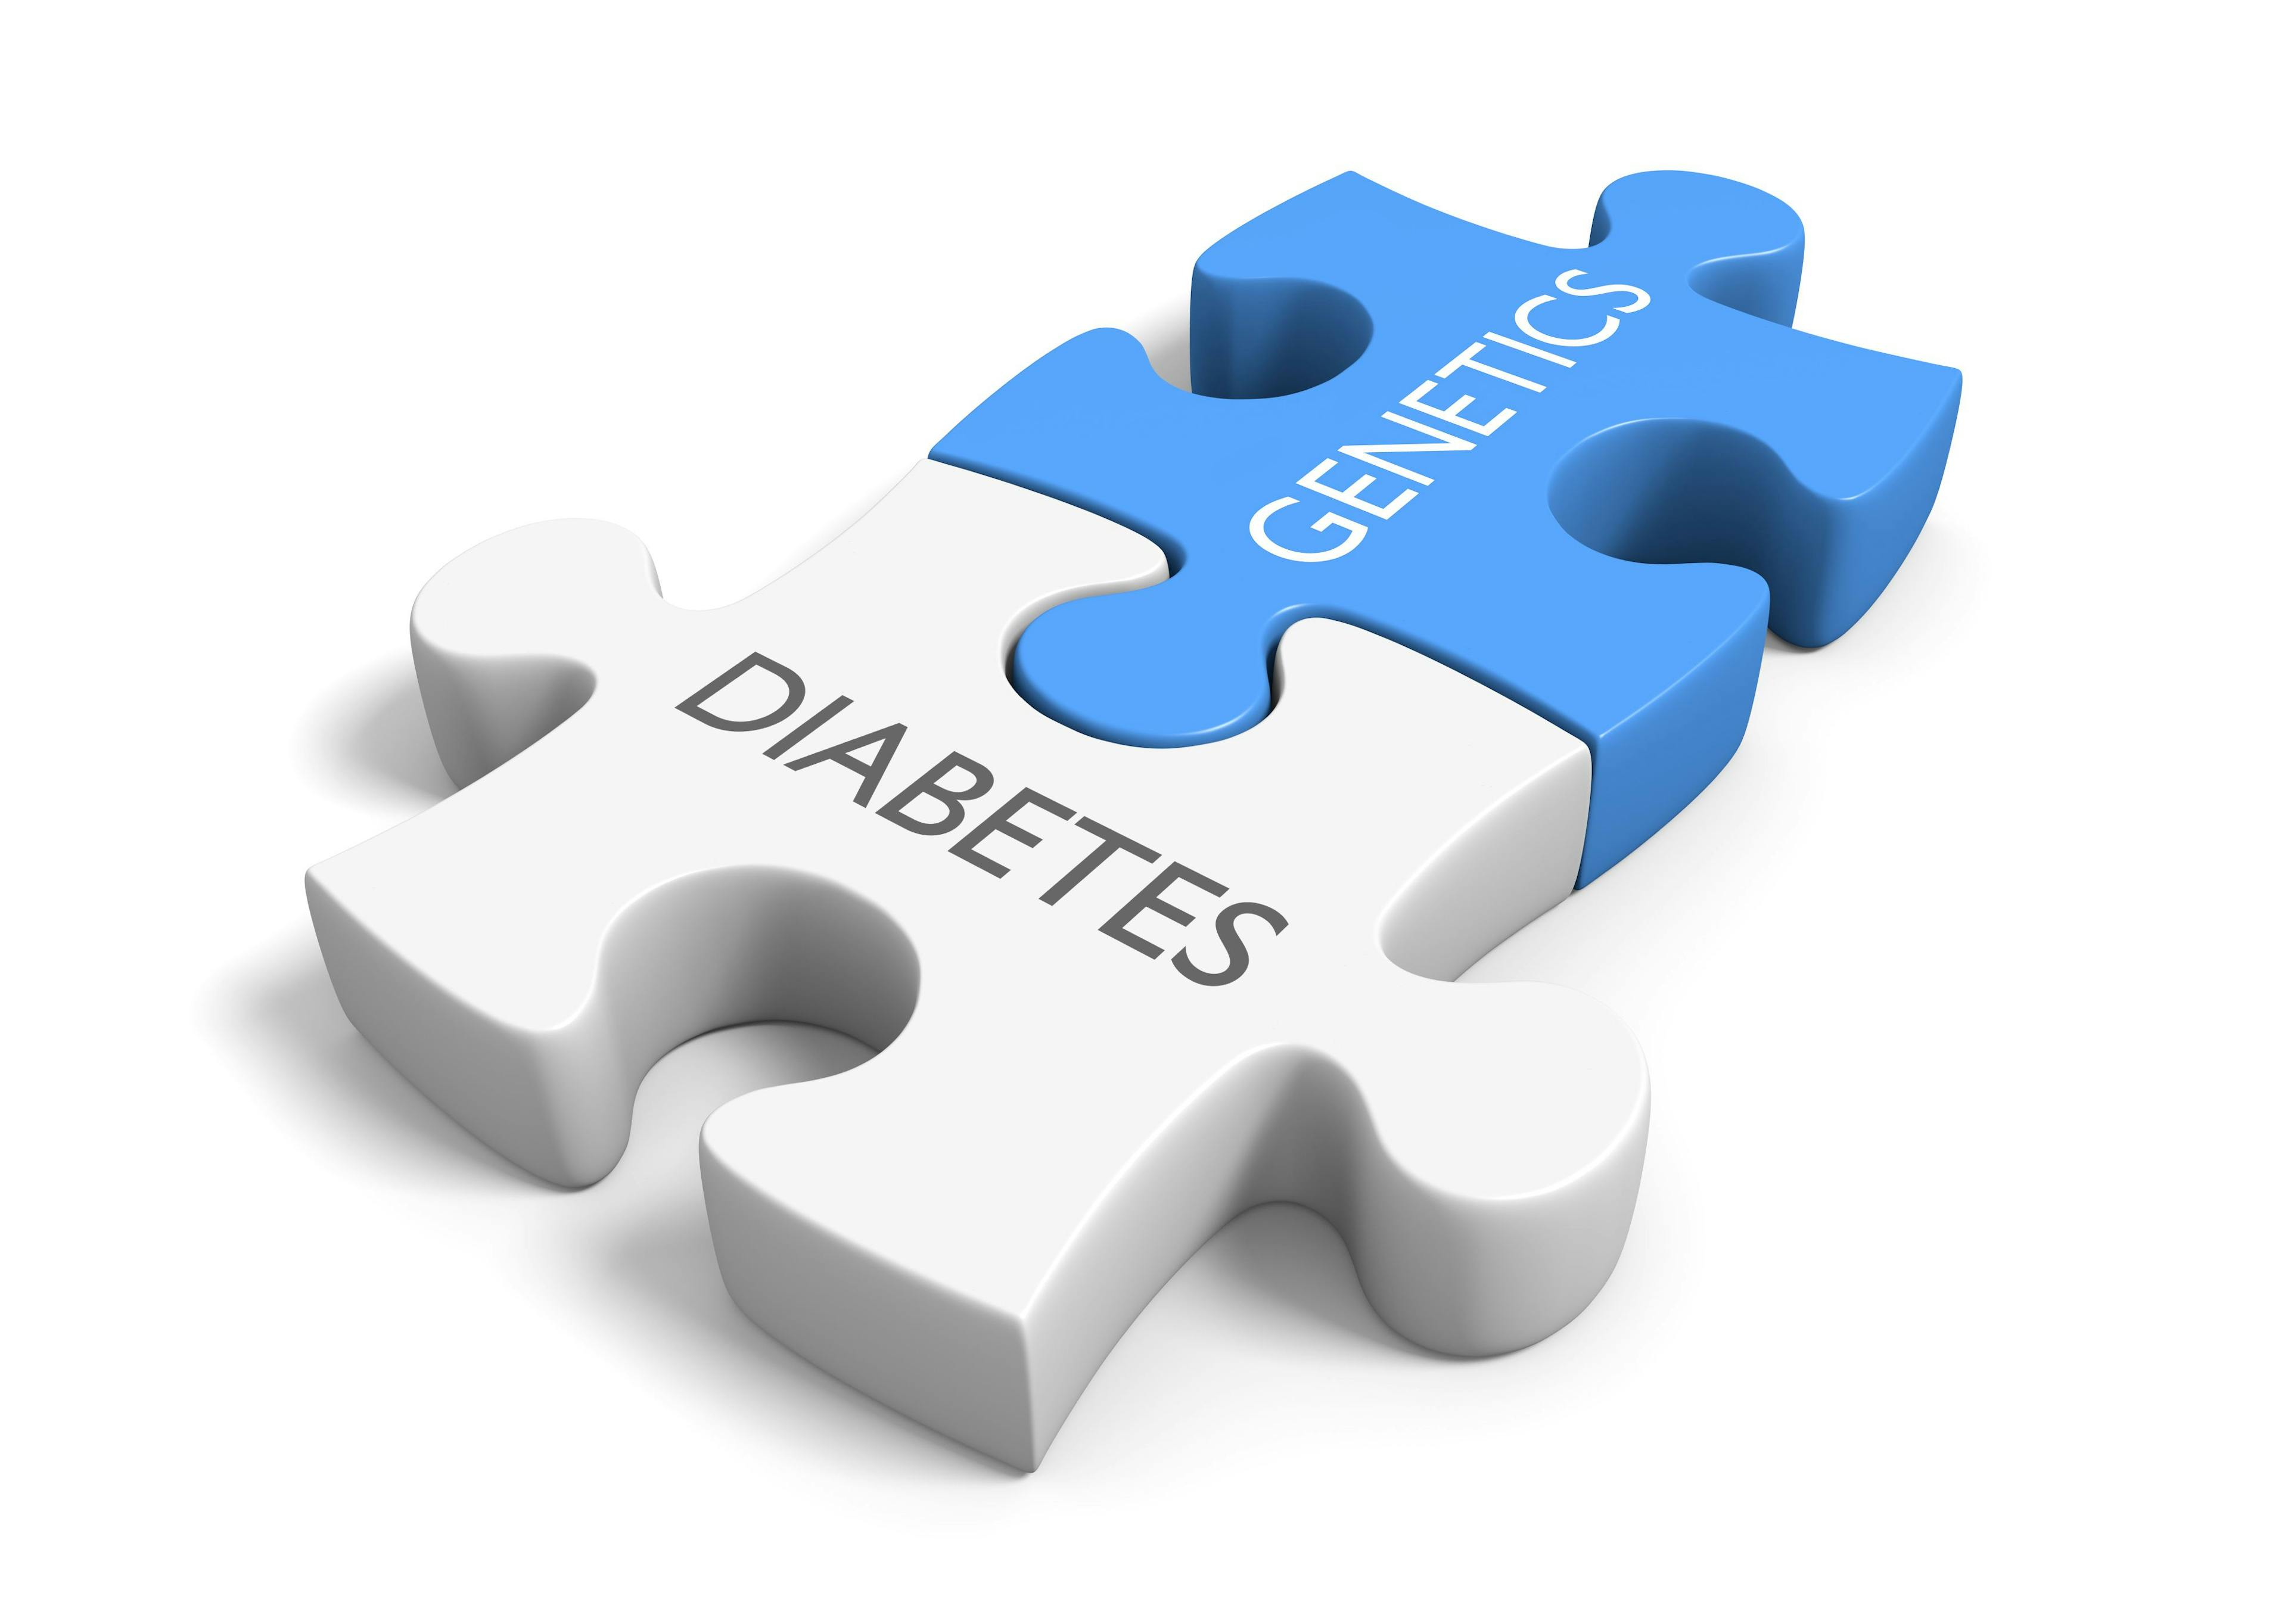 Teplizumab Delays Type 1 Diabetes Onset